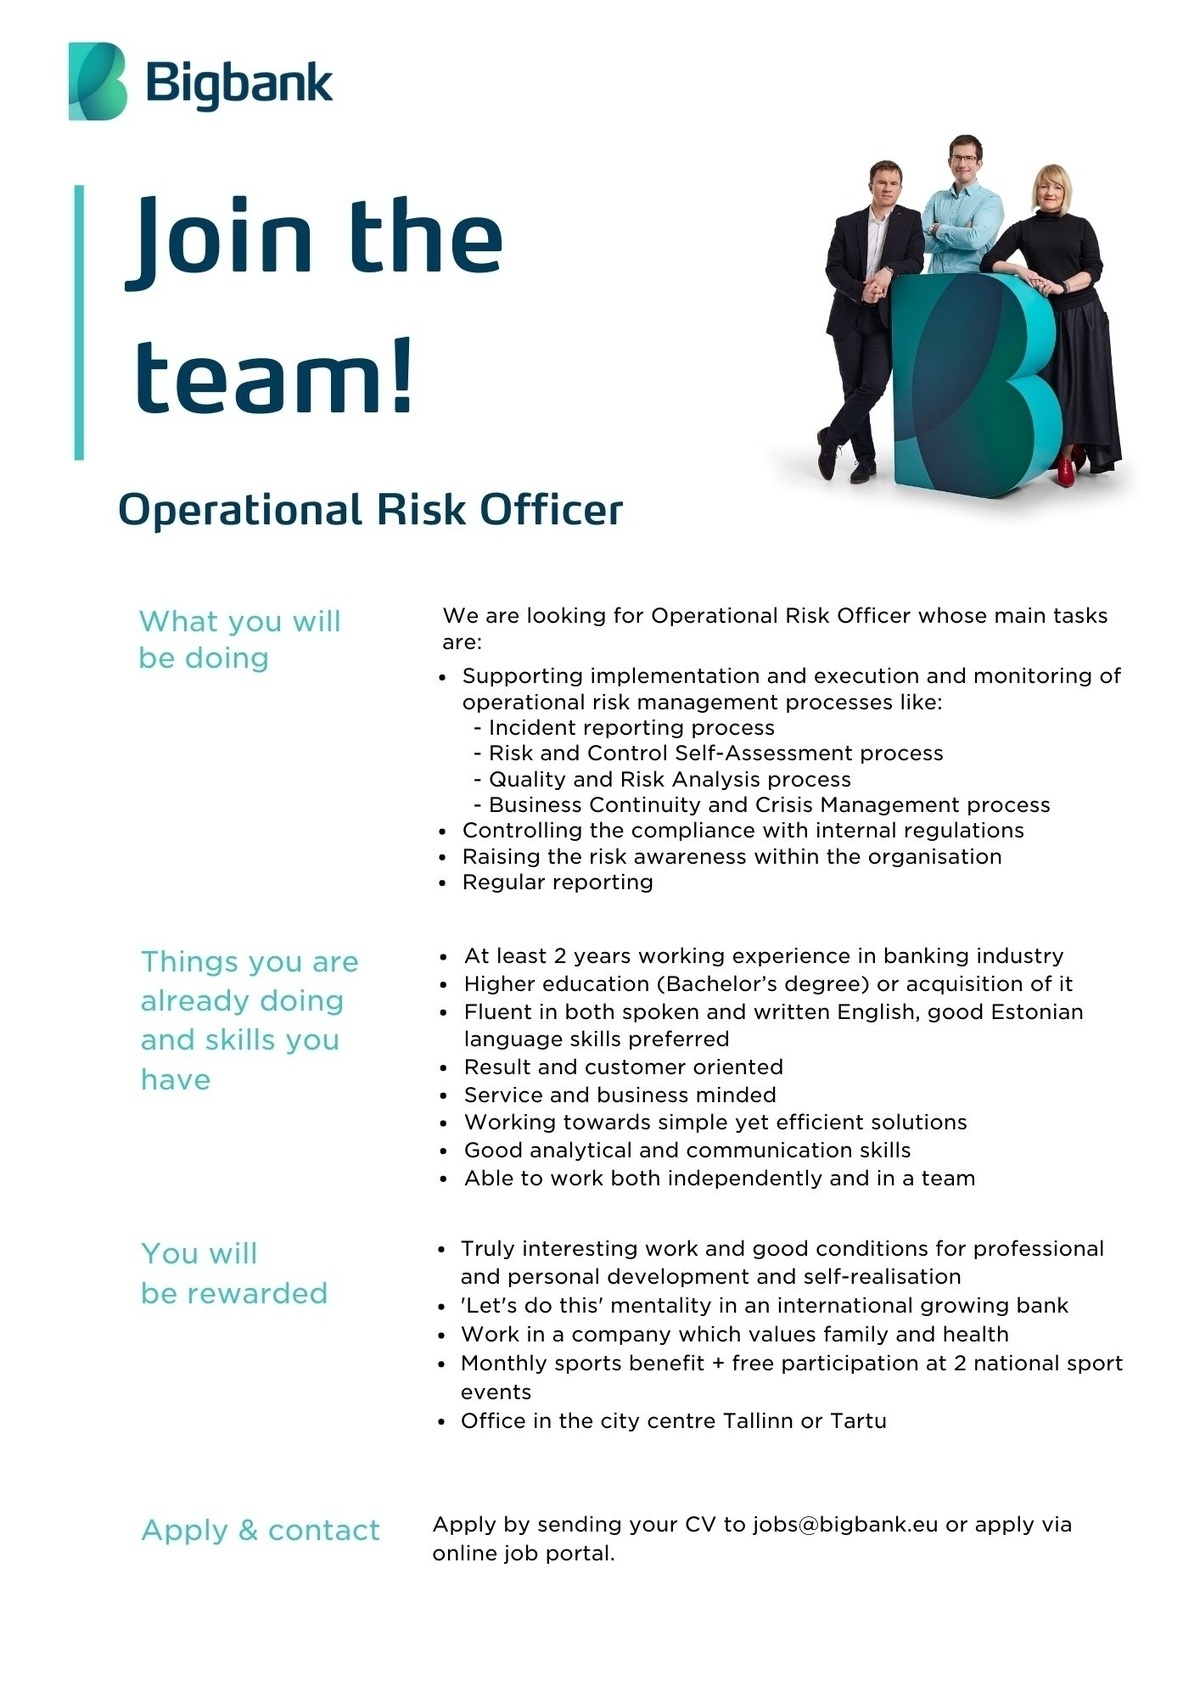 BIGBANK AS Operational Risk Officer